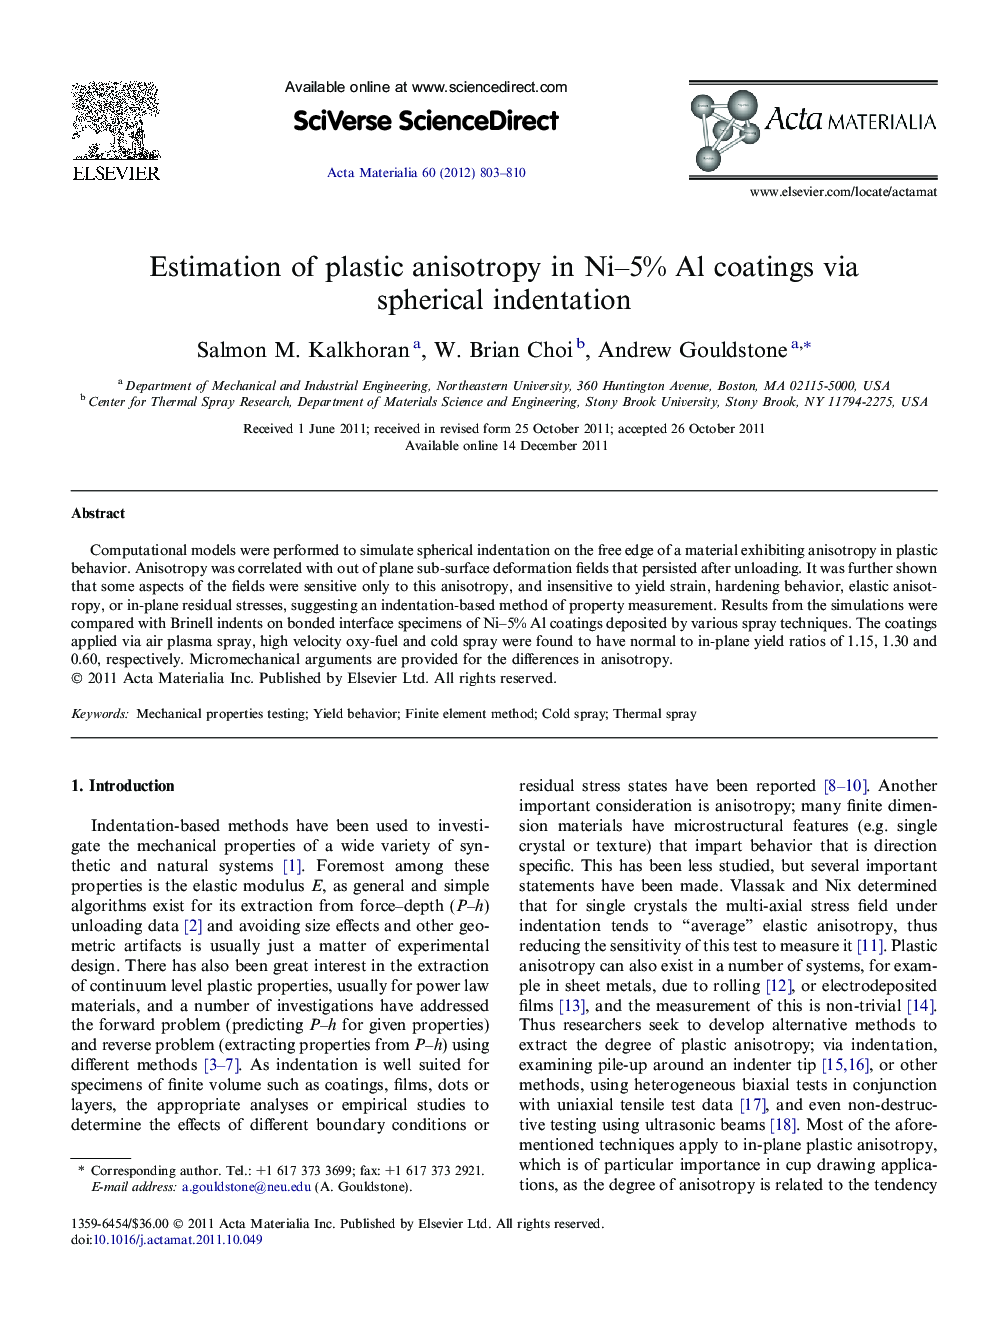 Estimation of plastic anisotropy in Ni-5% Al coatings via spherical indentation